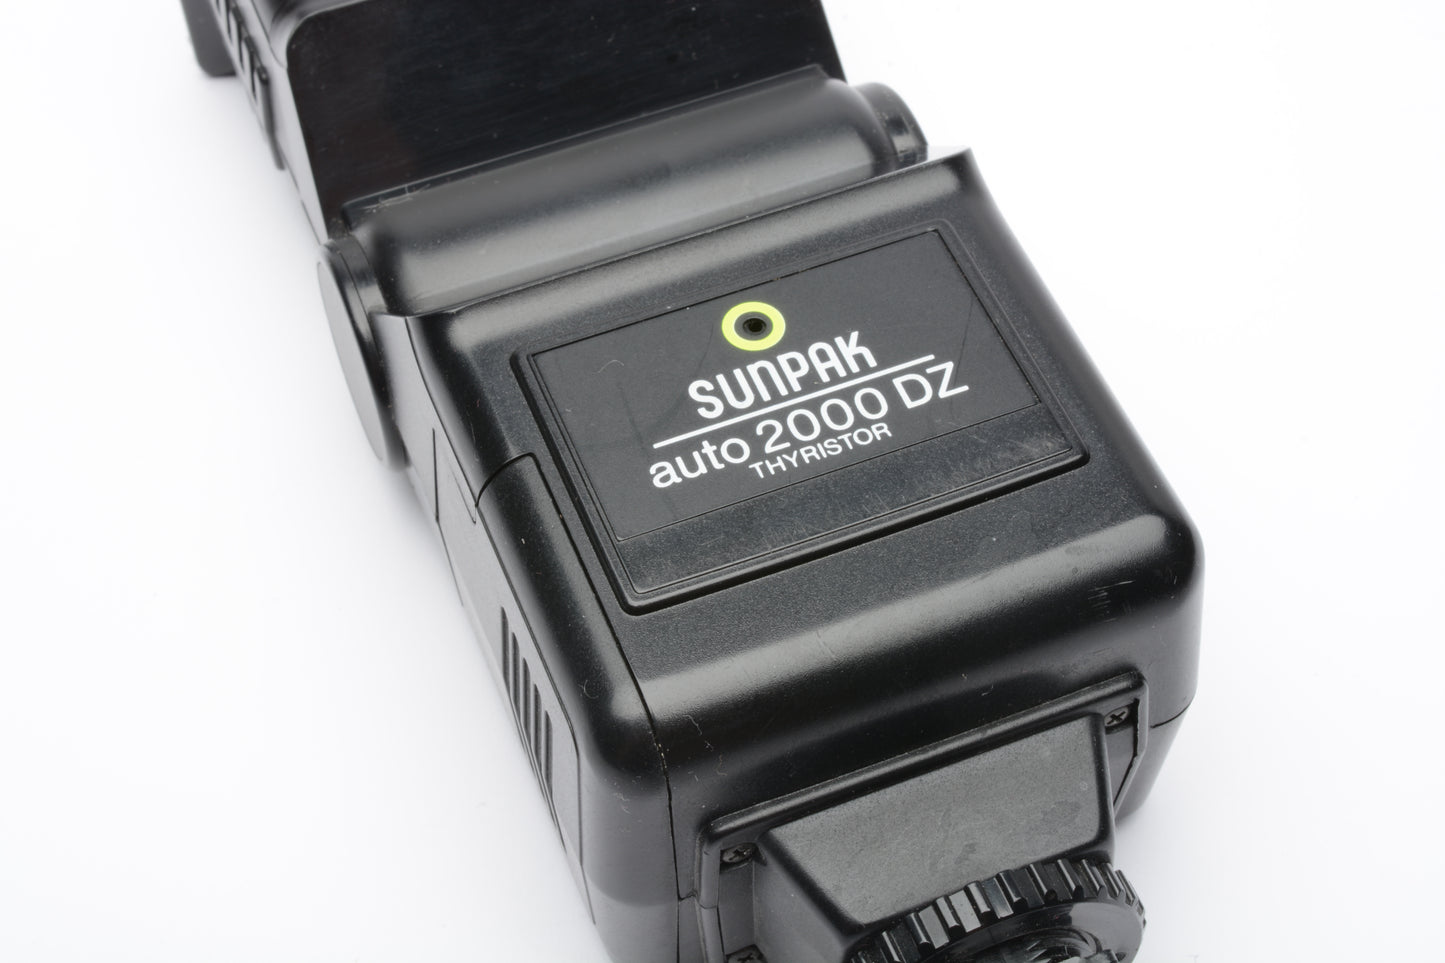 Sunpak Auto 2000 DZ Thyristor flash for Canon, Nikon, Pentax, Minolta, Olympus, Ricoh